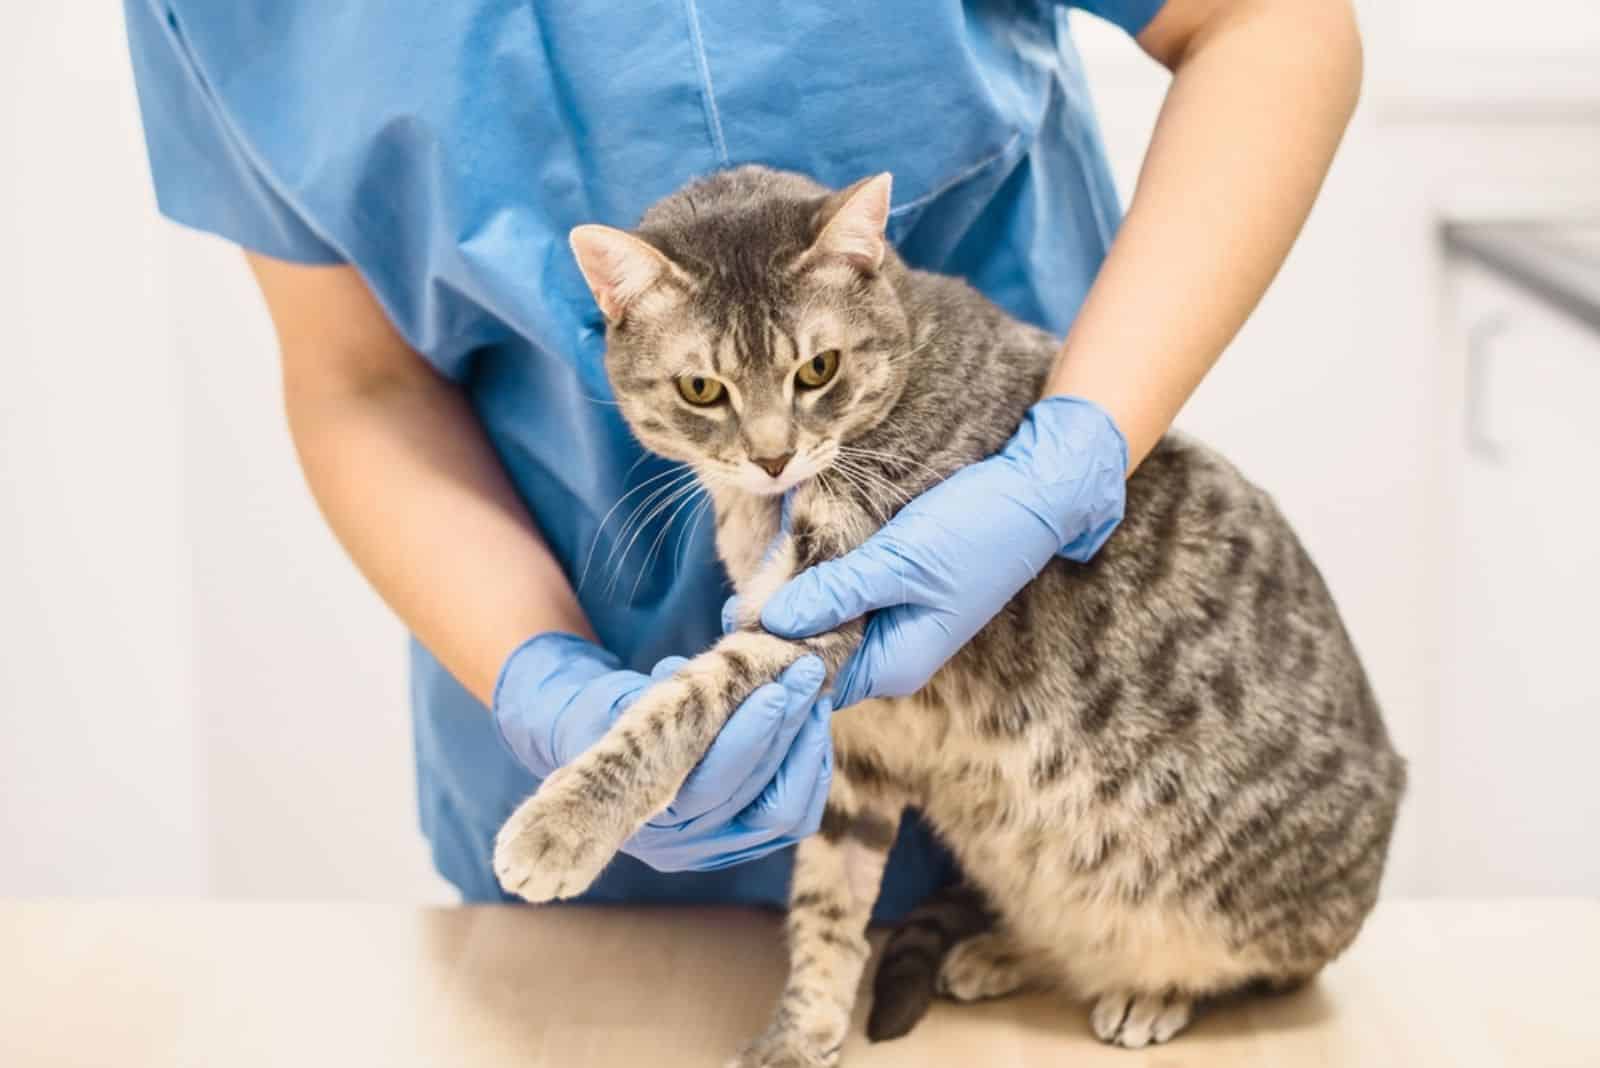 A veterinarian doctor examining the injured leg of a grey cat